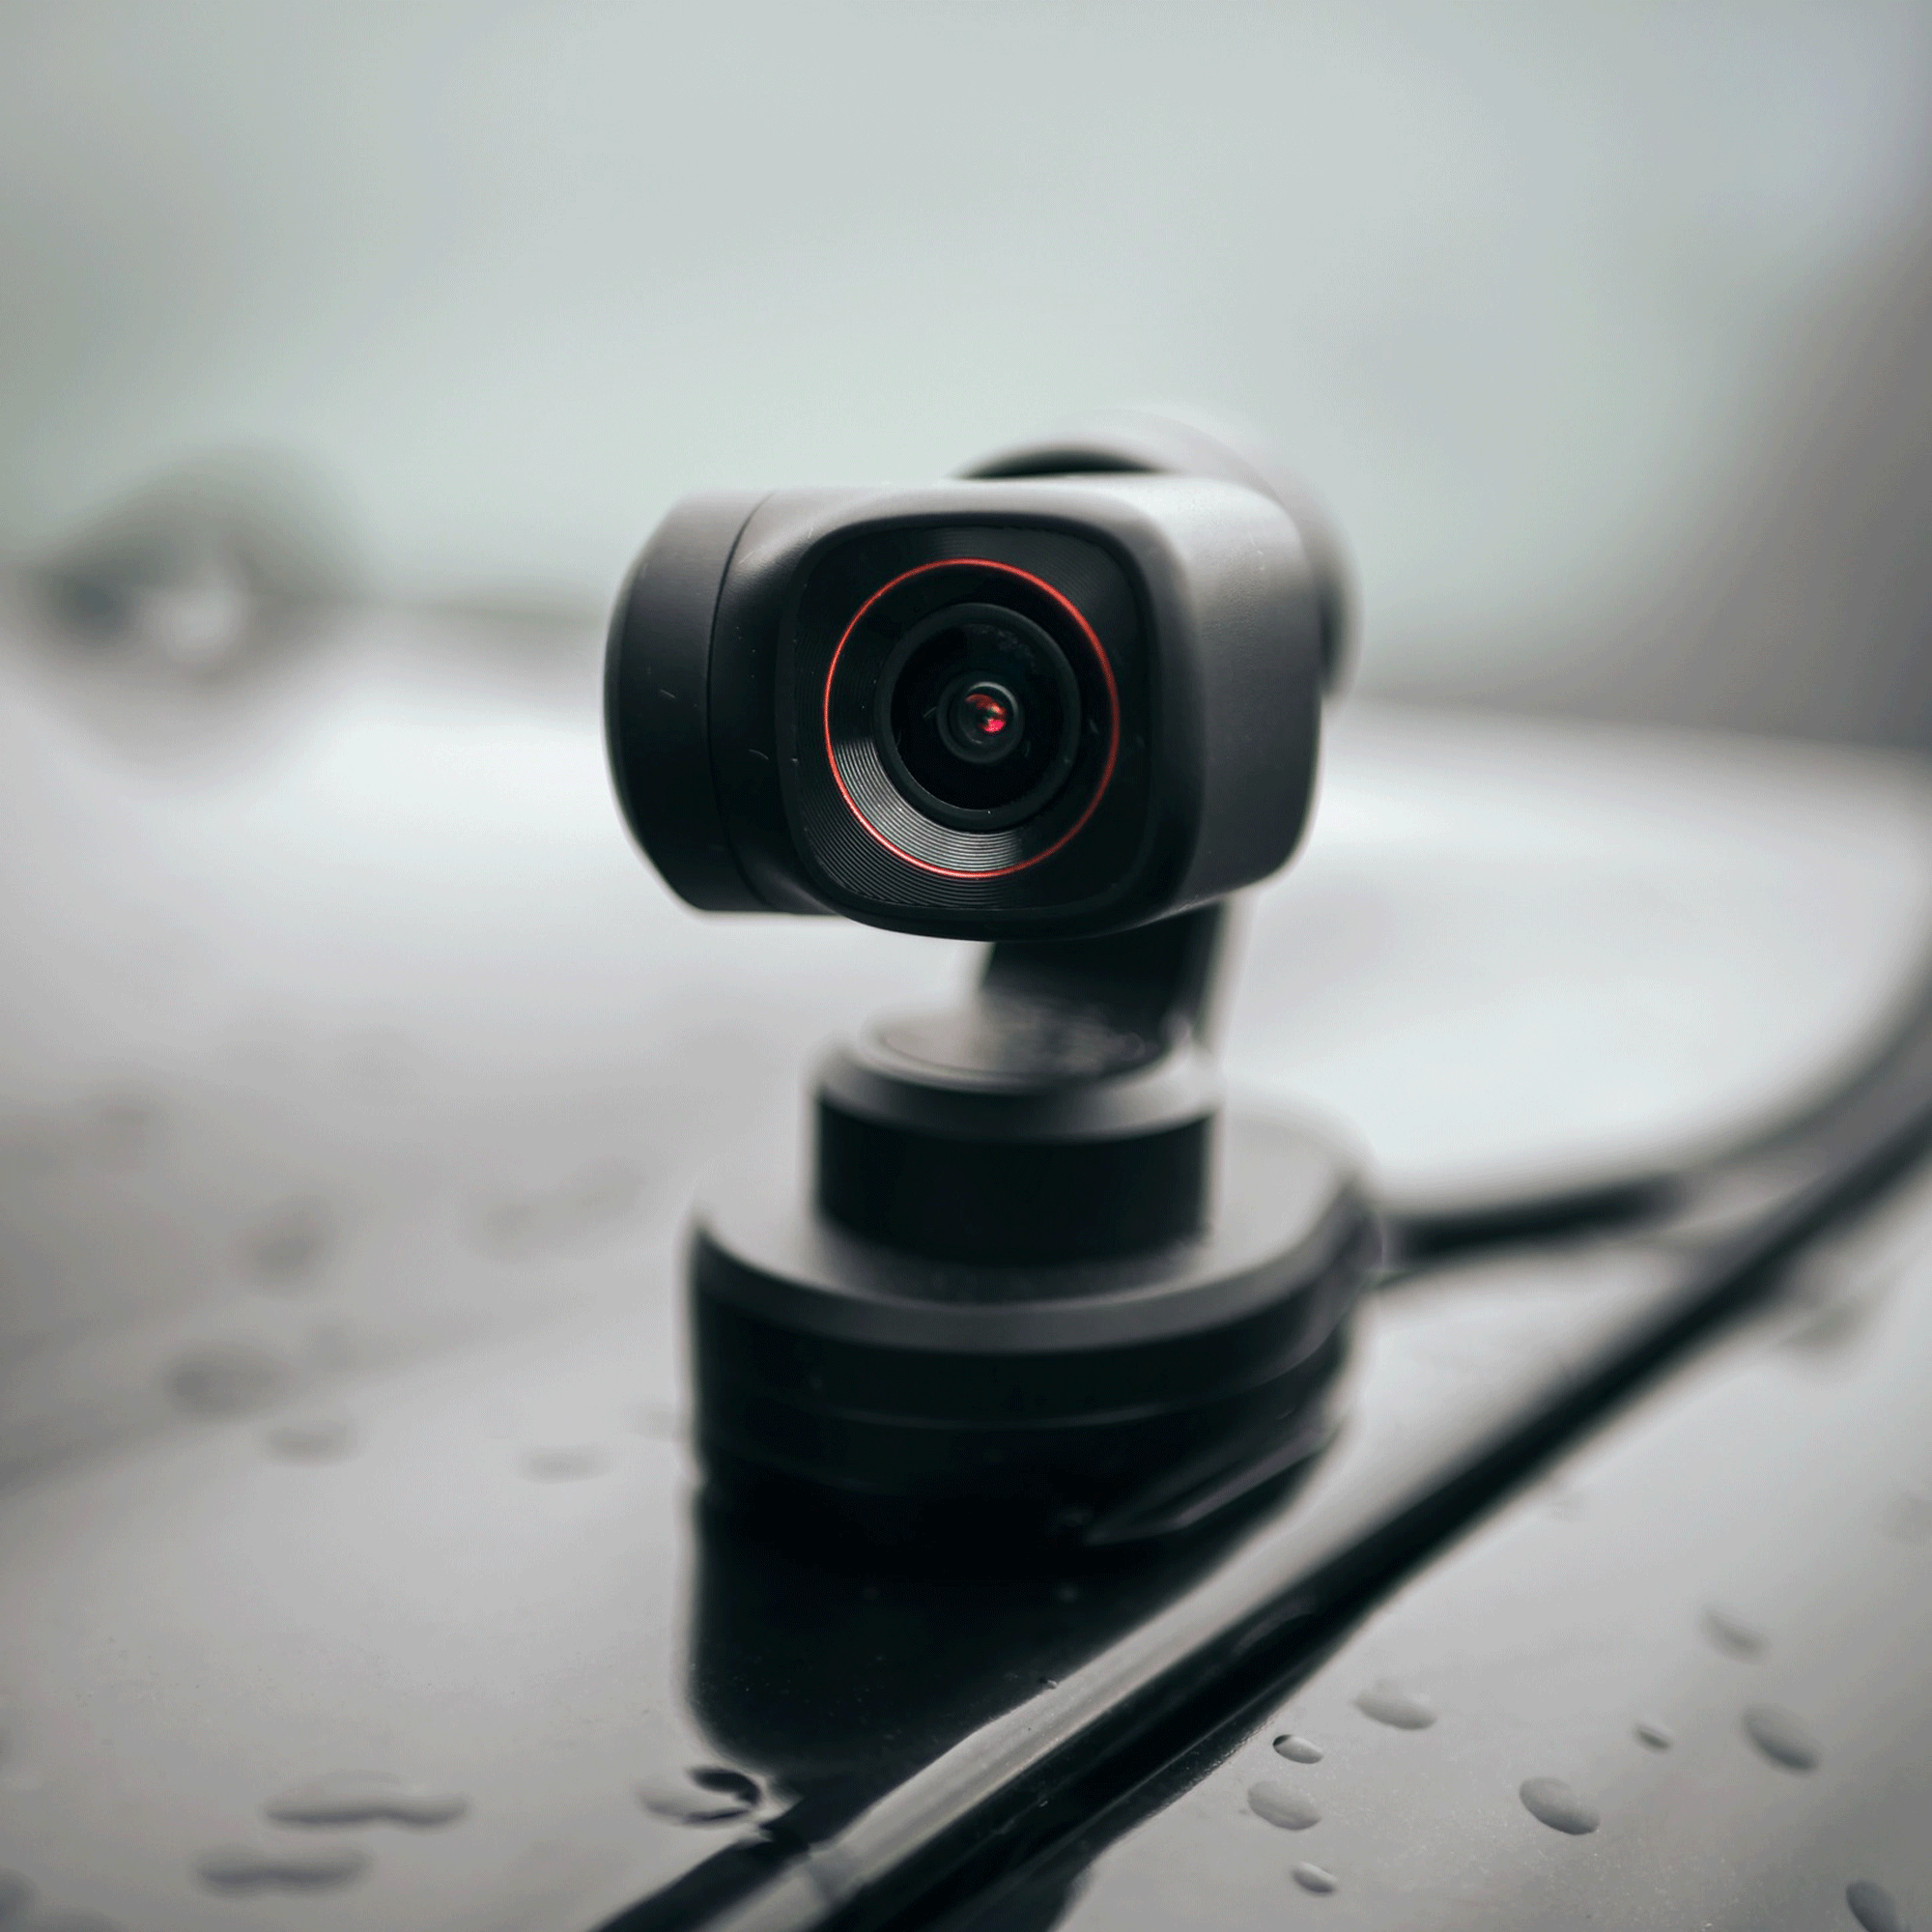 Feiyu Pocket 3's detachable gimbal camera